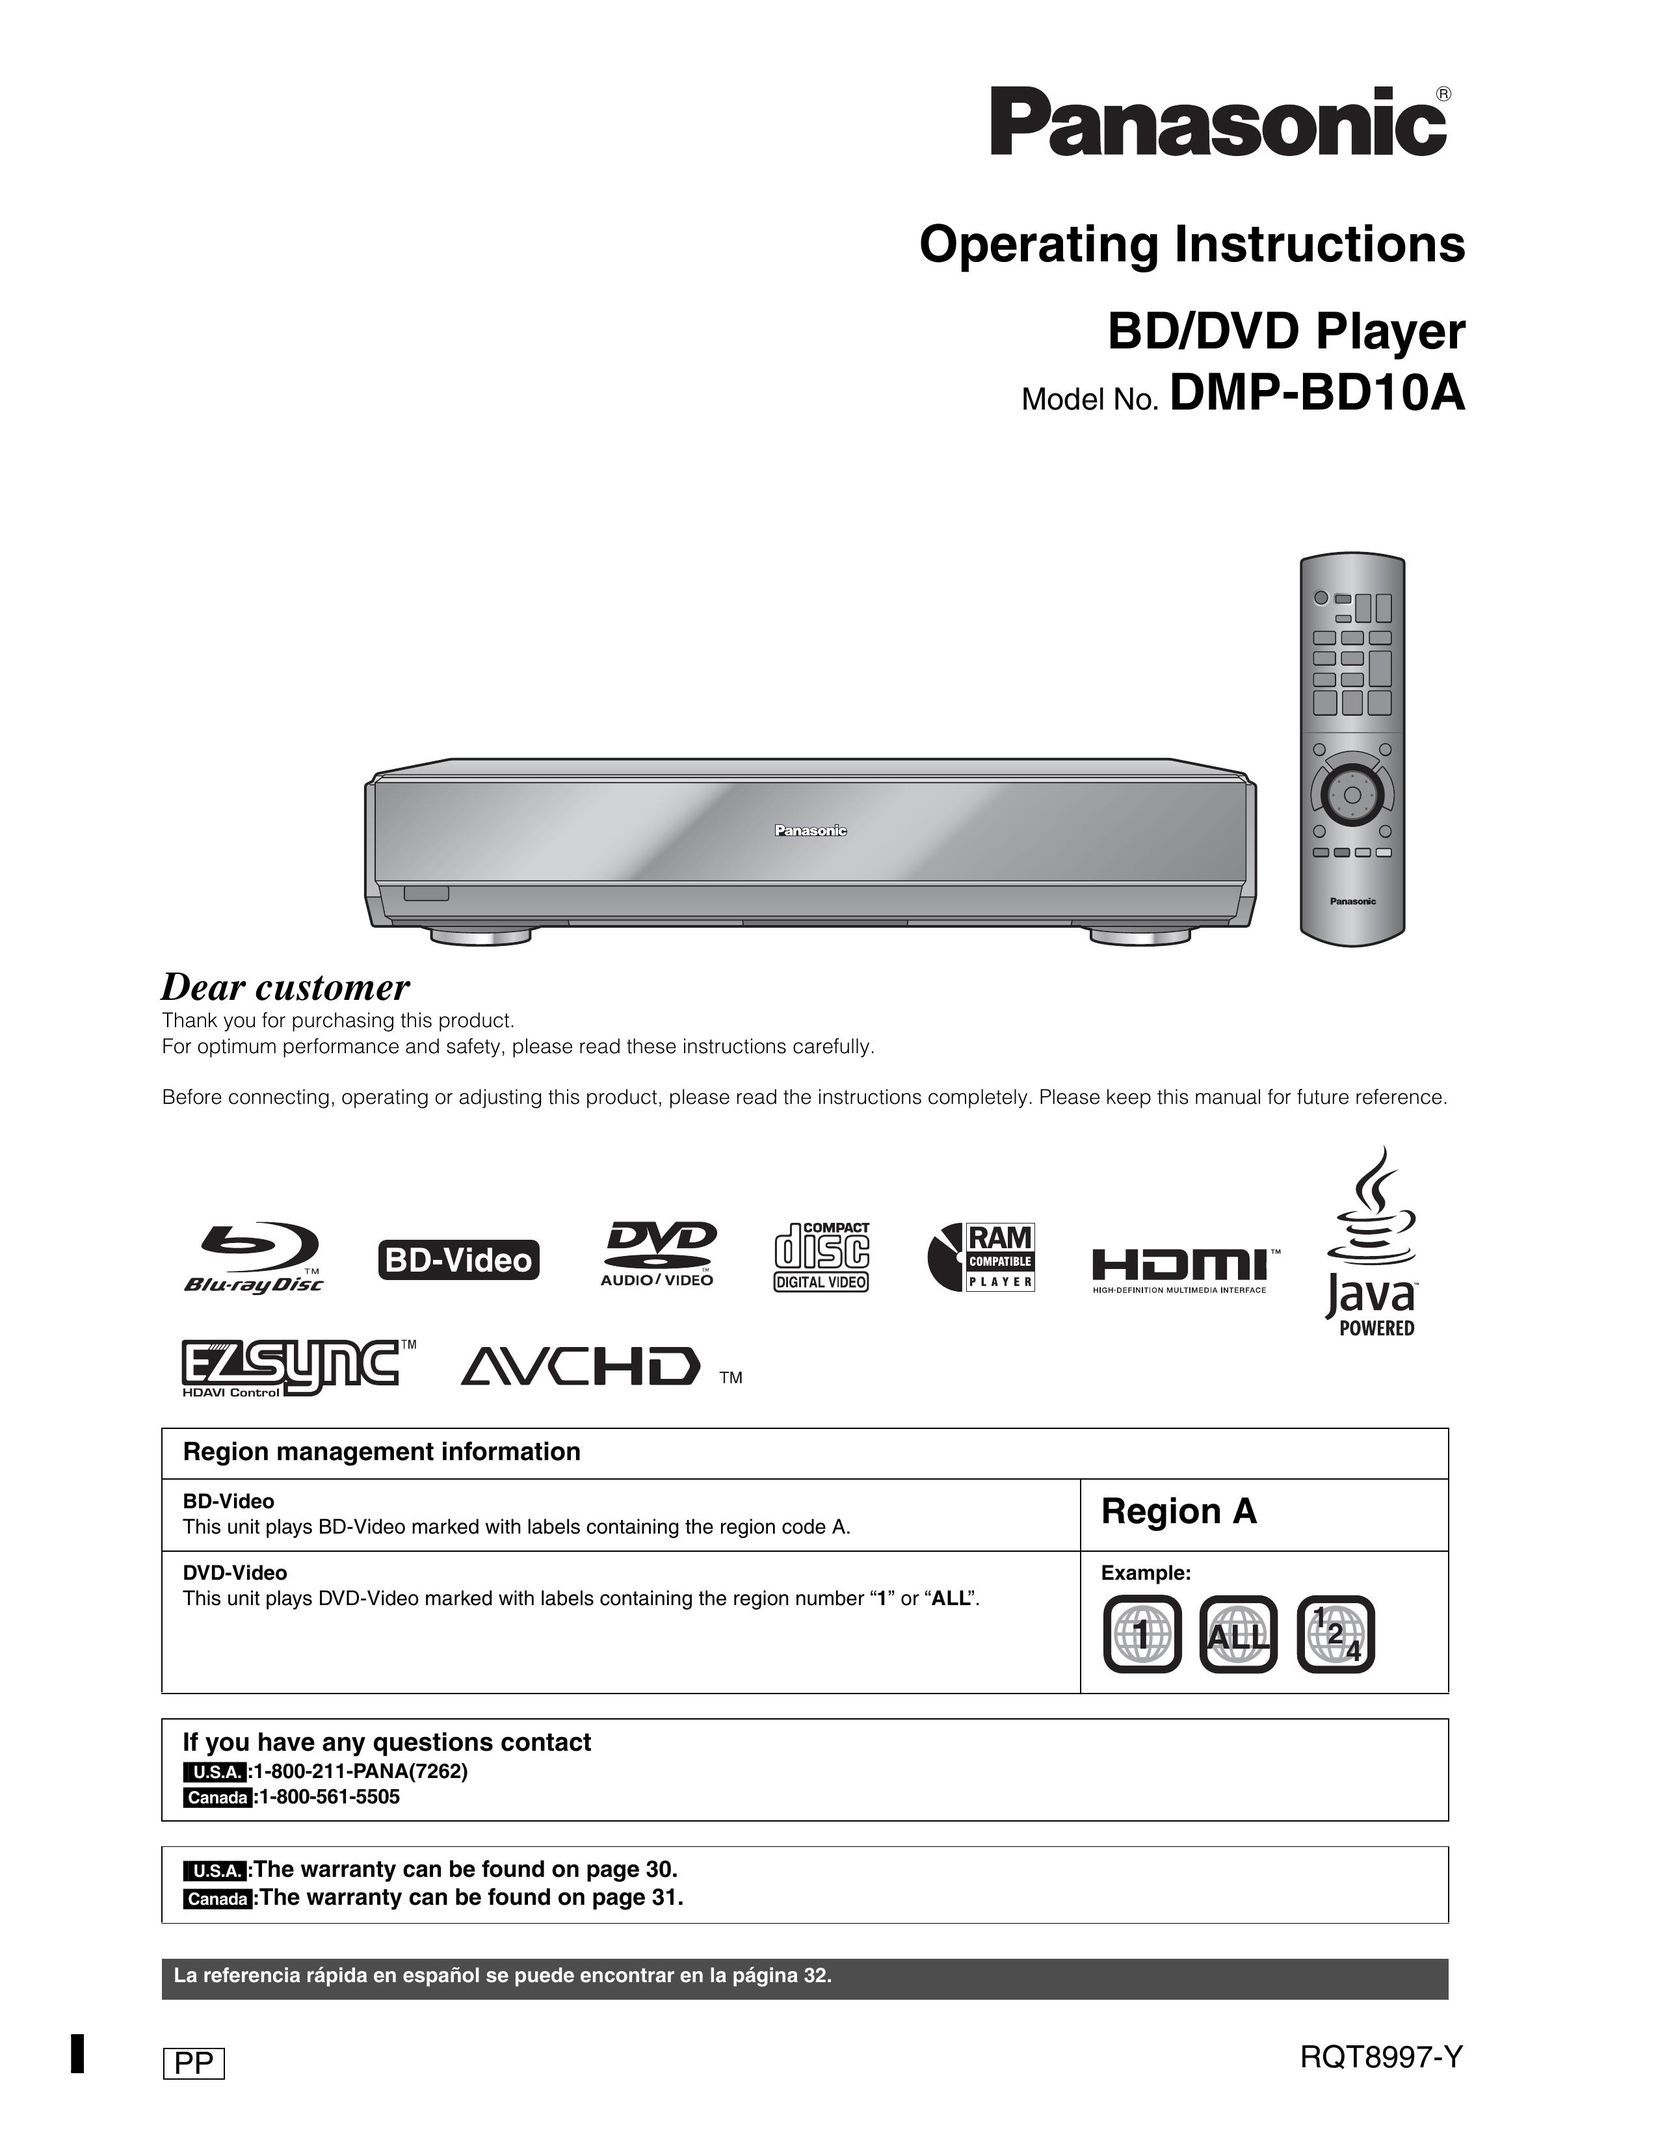 Panasonic DMP-BD10A DVD Player User Manual